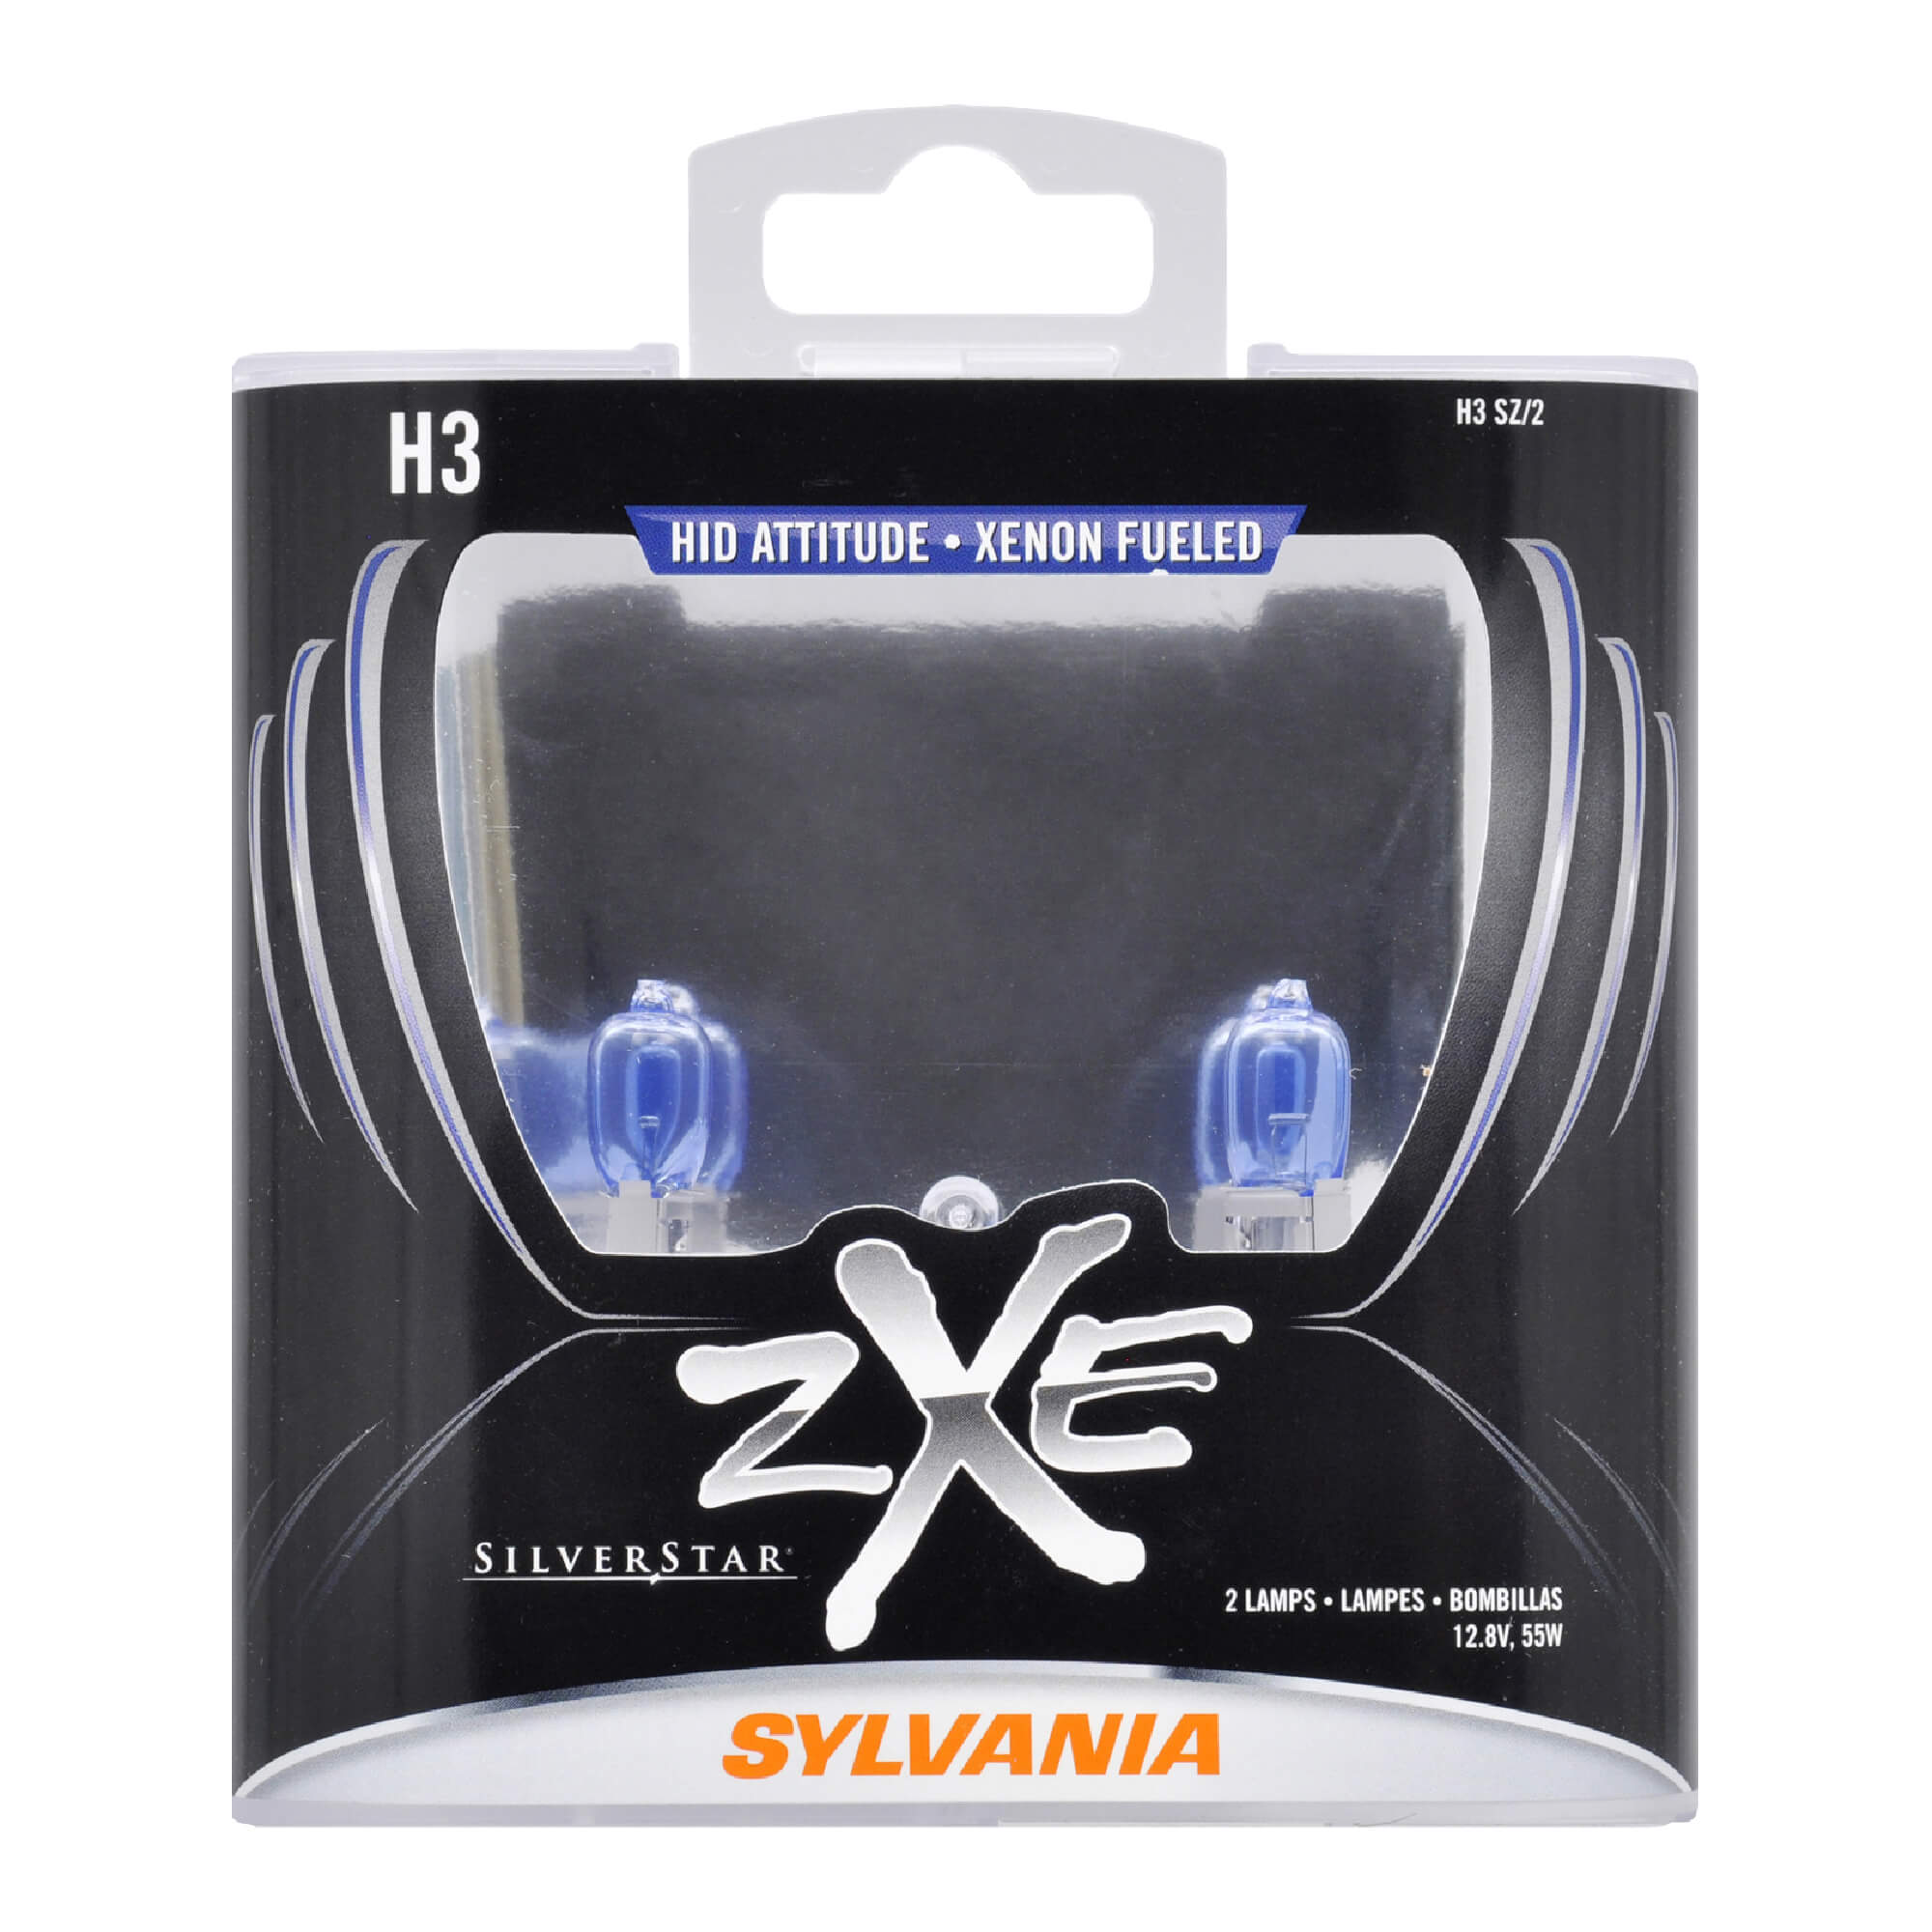 SYLVANIA H3 SilverStar zXe Halogen Fog Bulb, 2 Pack